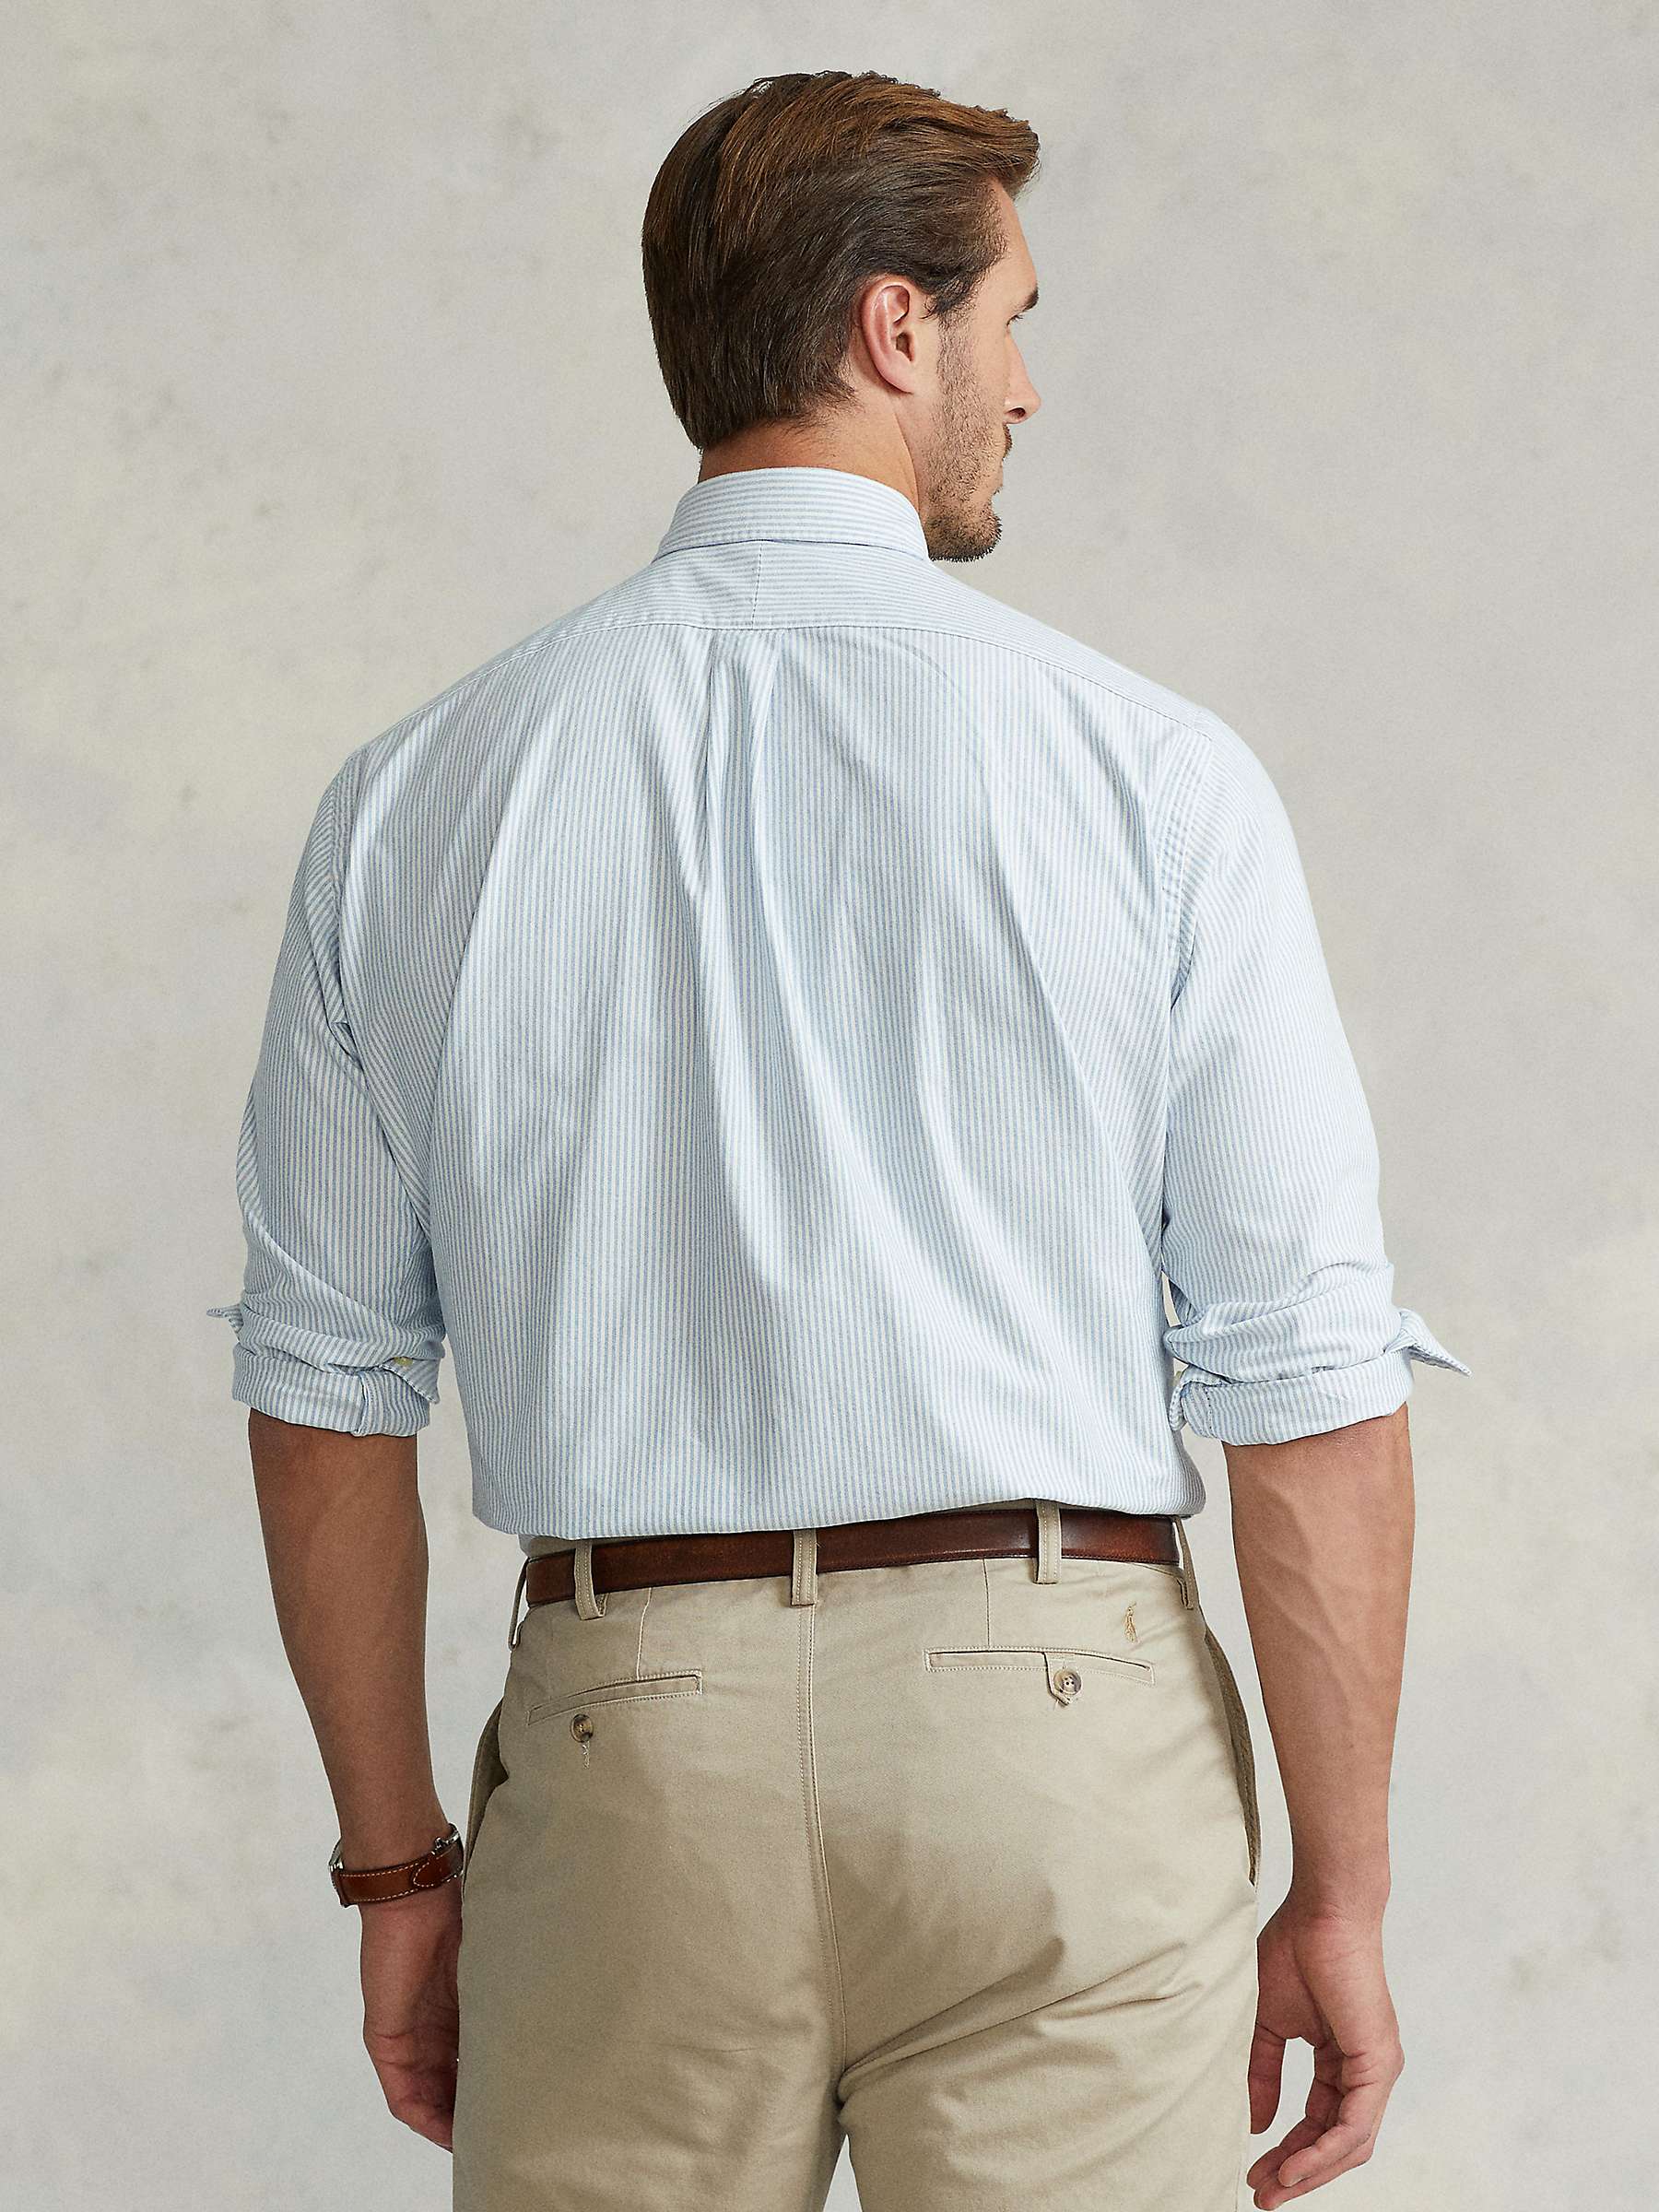 Buy Polo Ralph Lauren Big & Tall Casual Sport Shirt, Blue/White Stripe Online at johnlewis.com